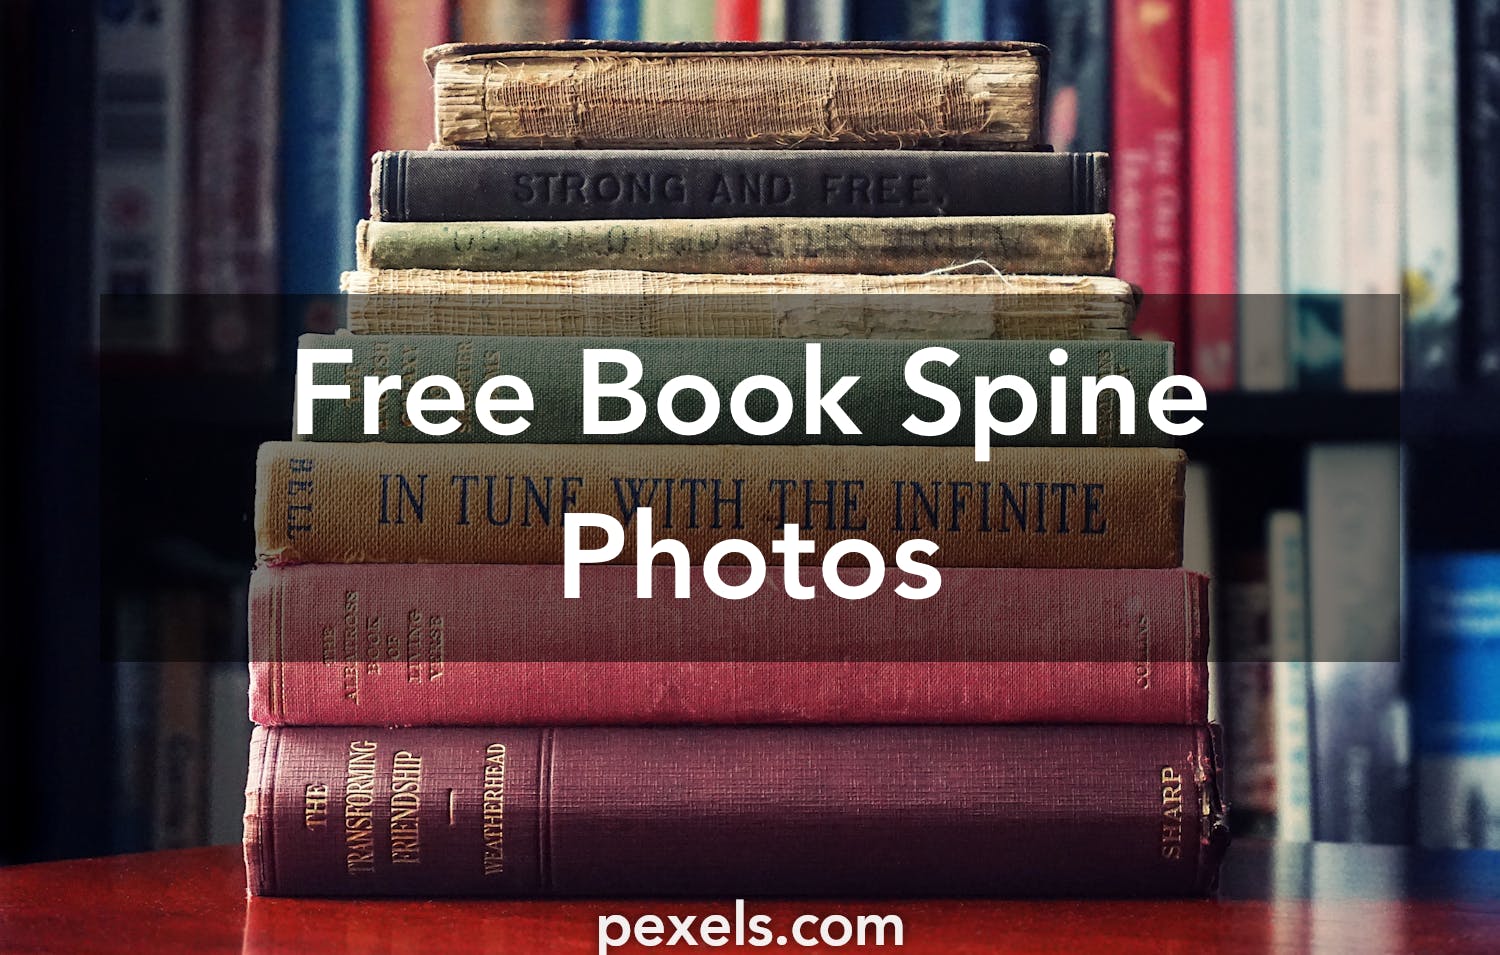 500-great-book-spine-photos-pexels-free-stock-photos